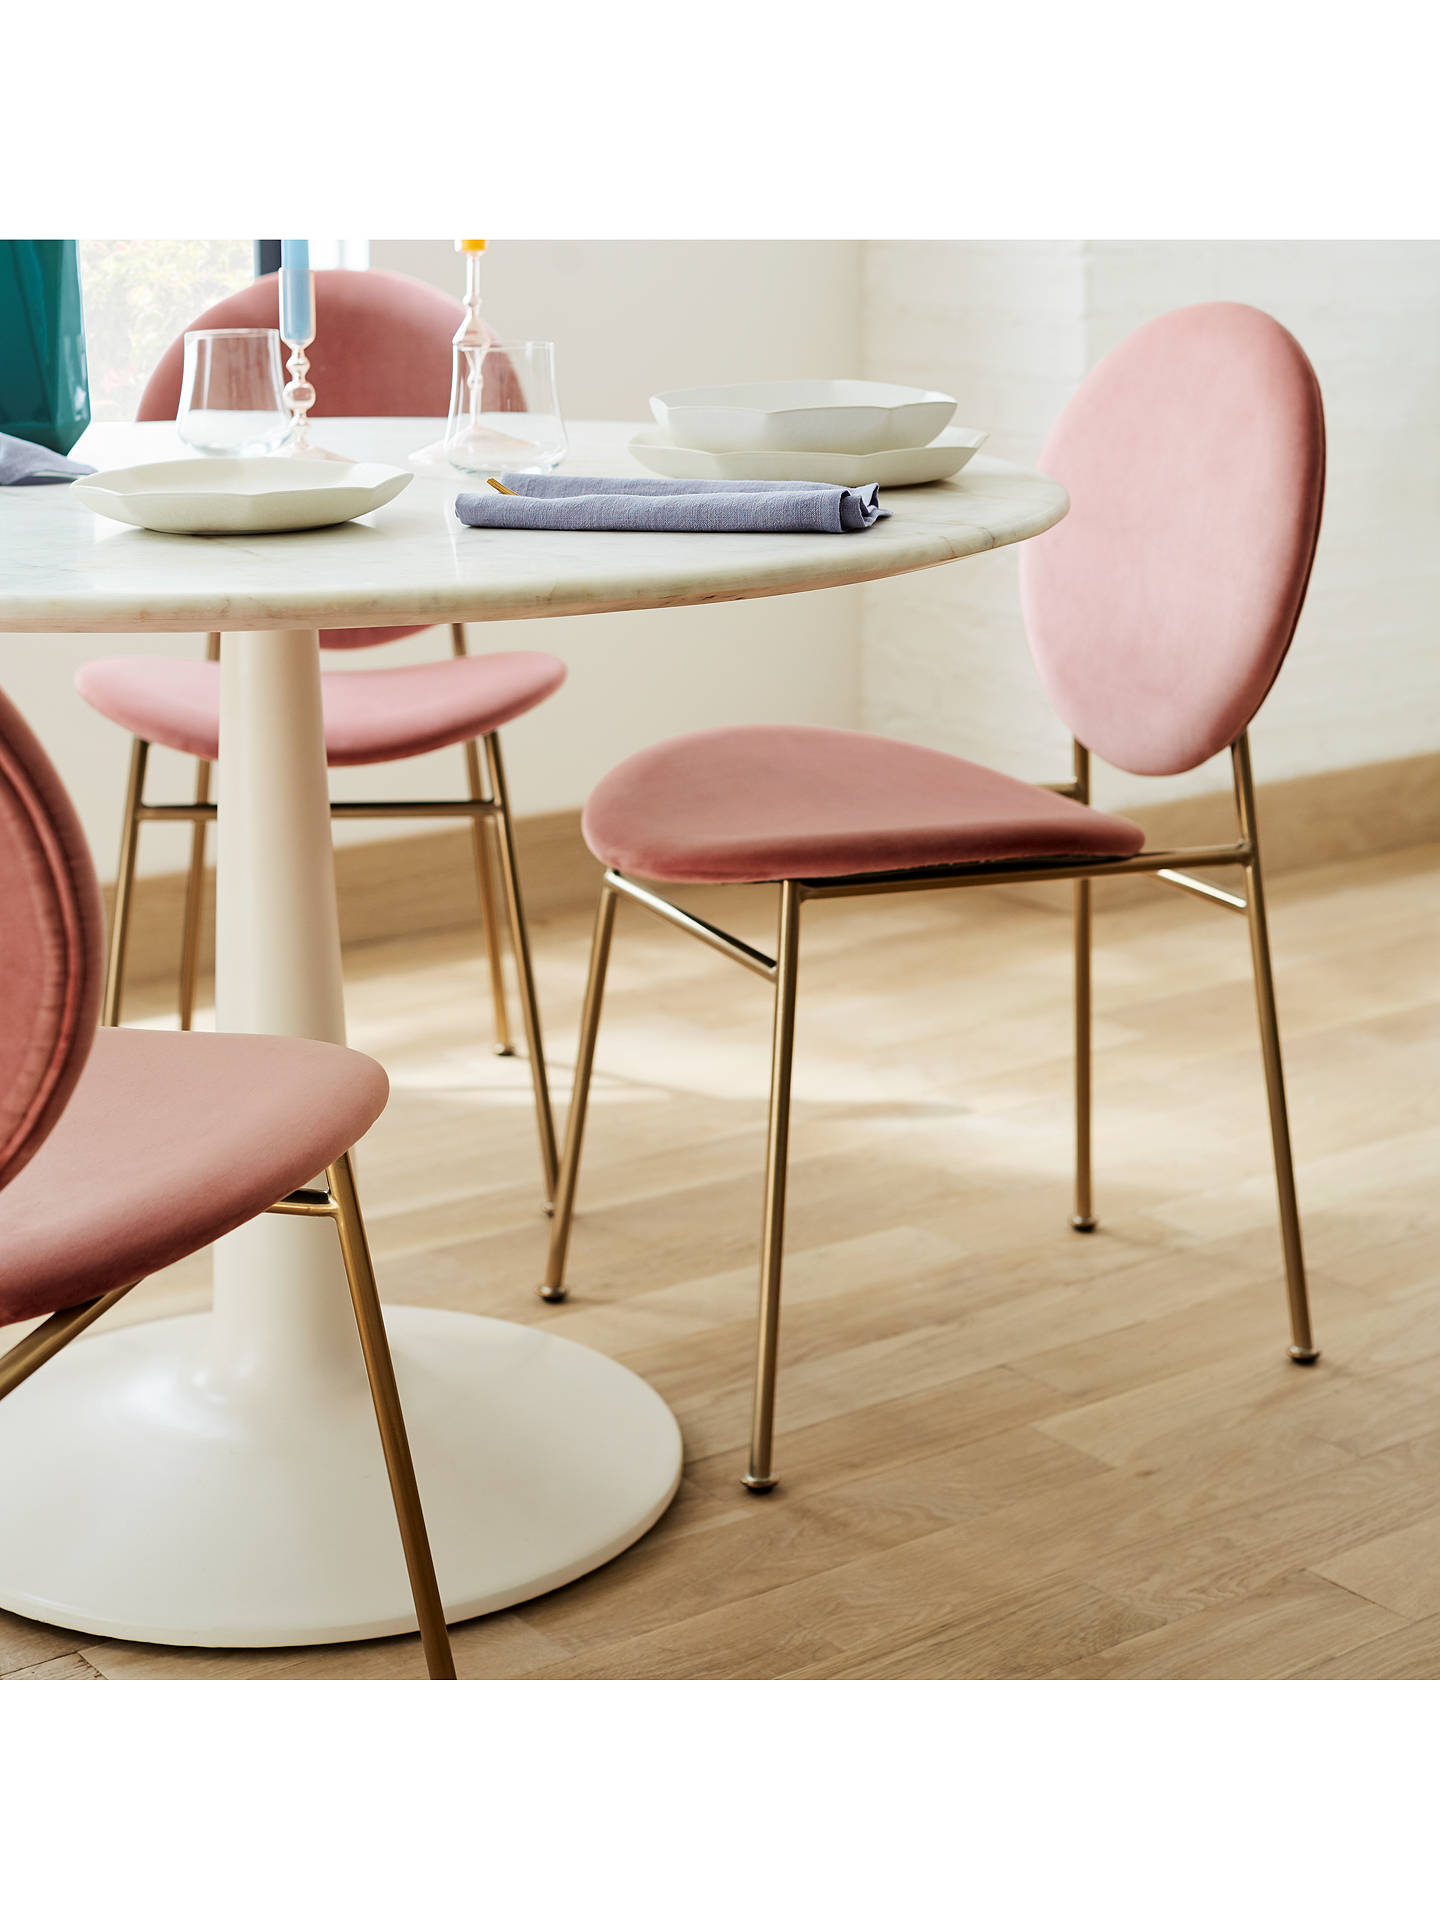 west elm ingrid dining chair pink